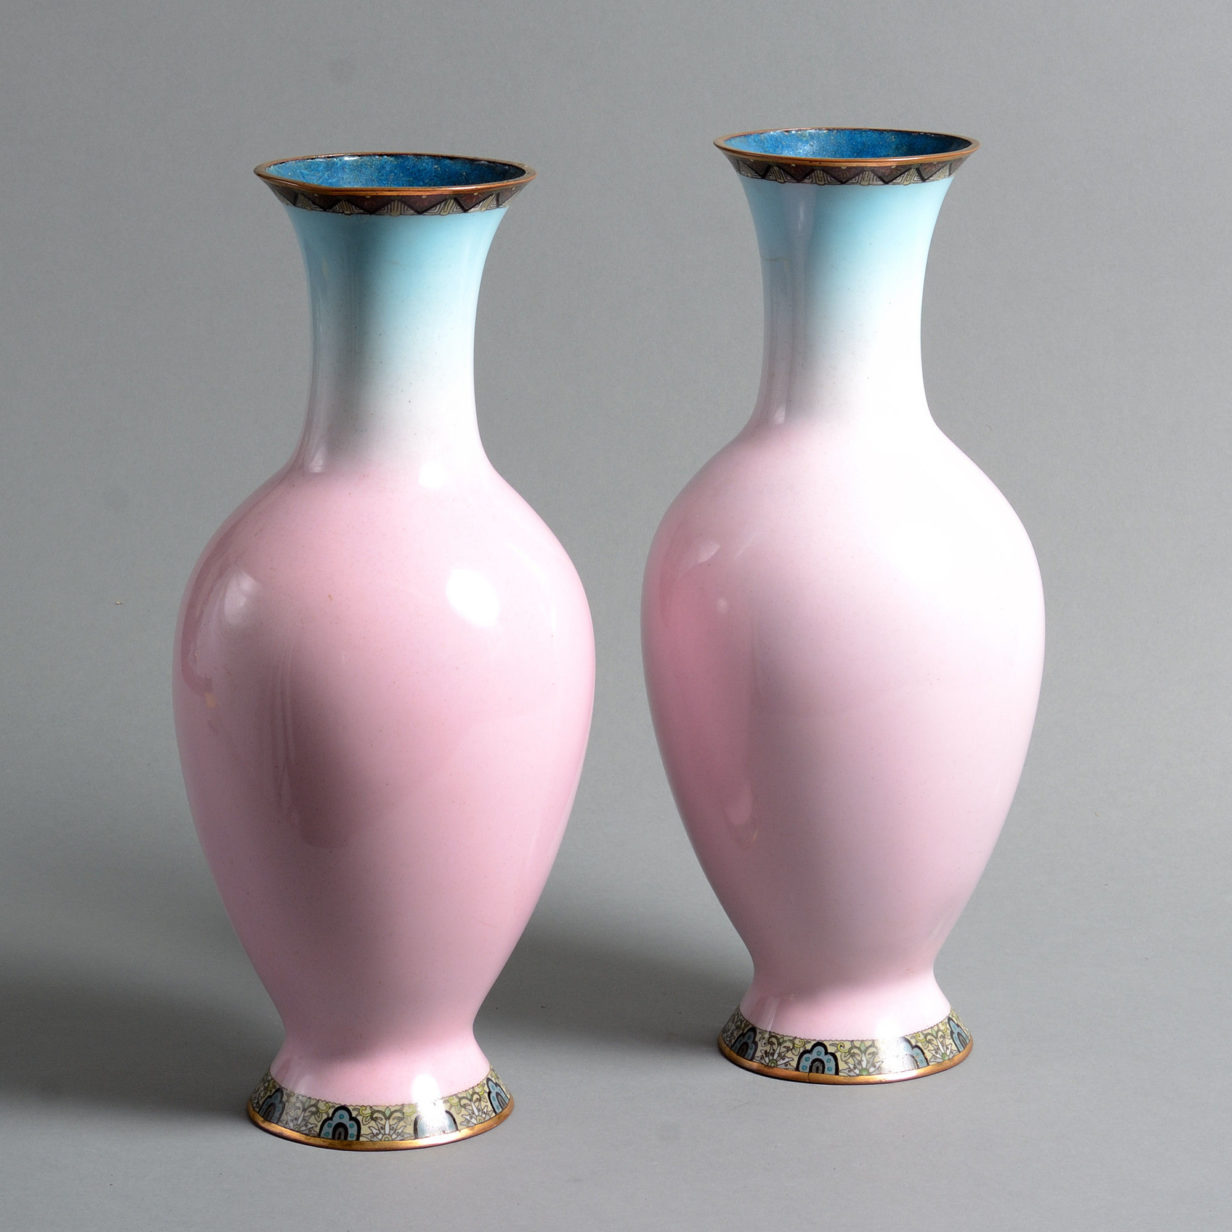 A 19th century meiji period pair of cloisonné vases